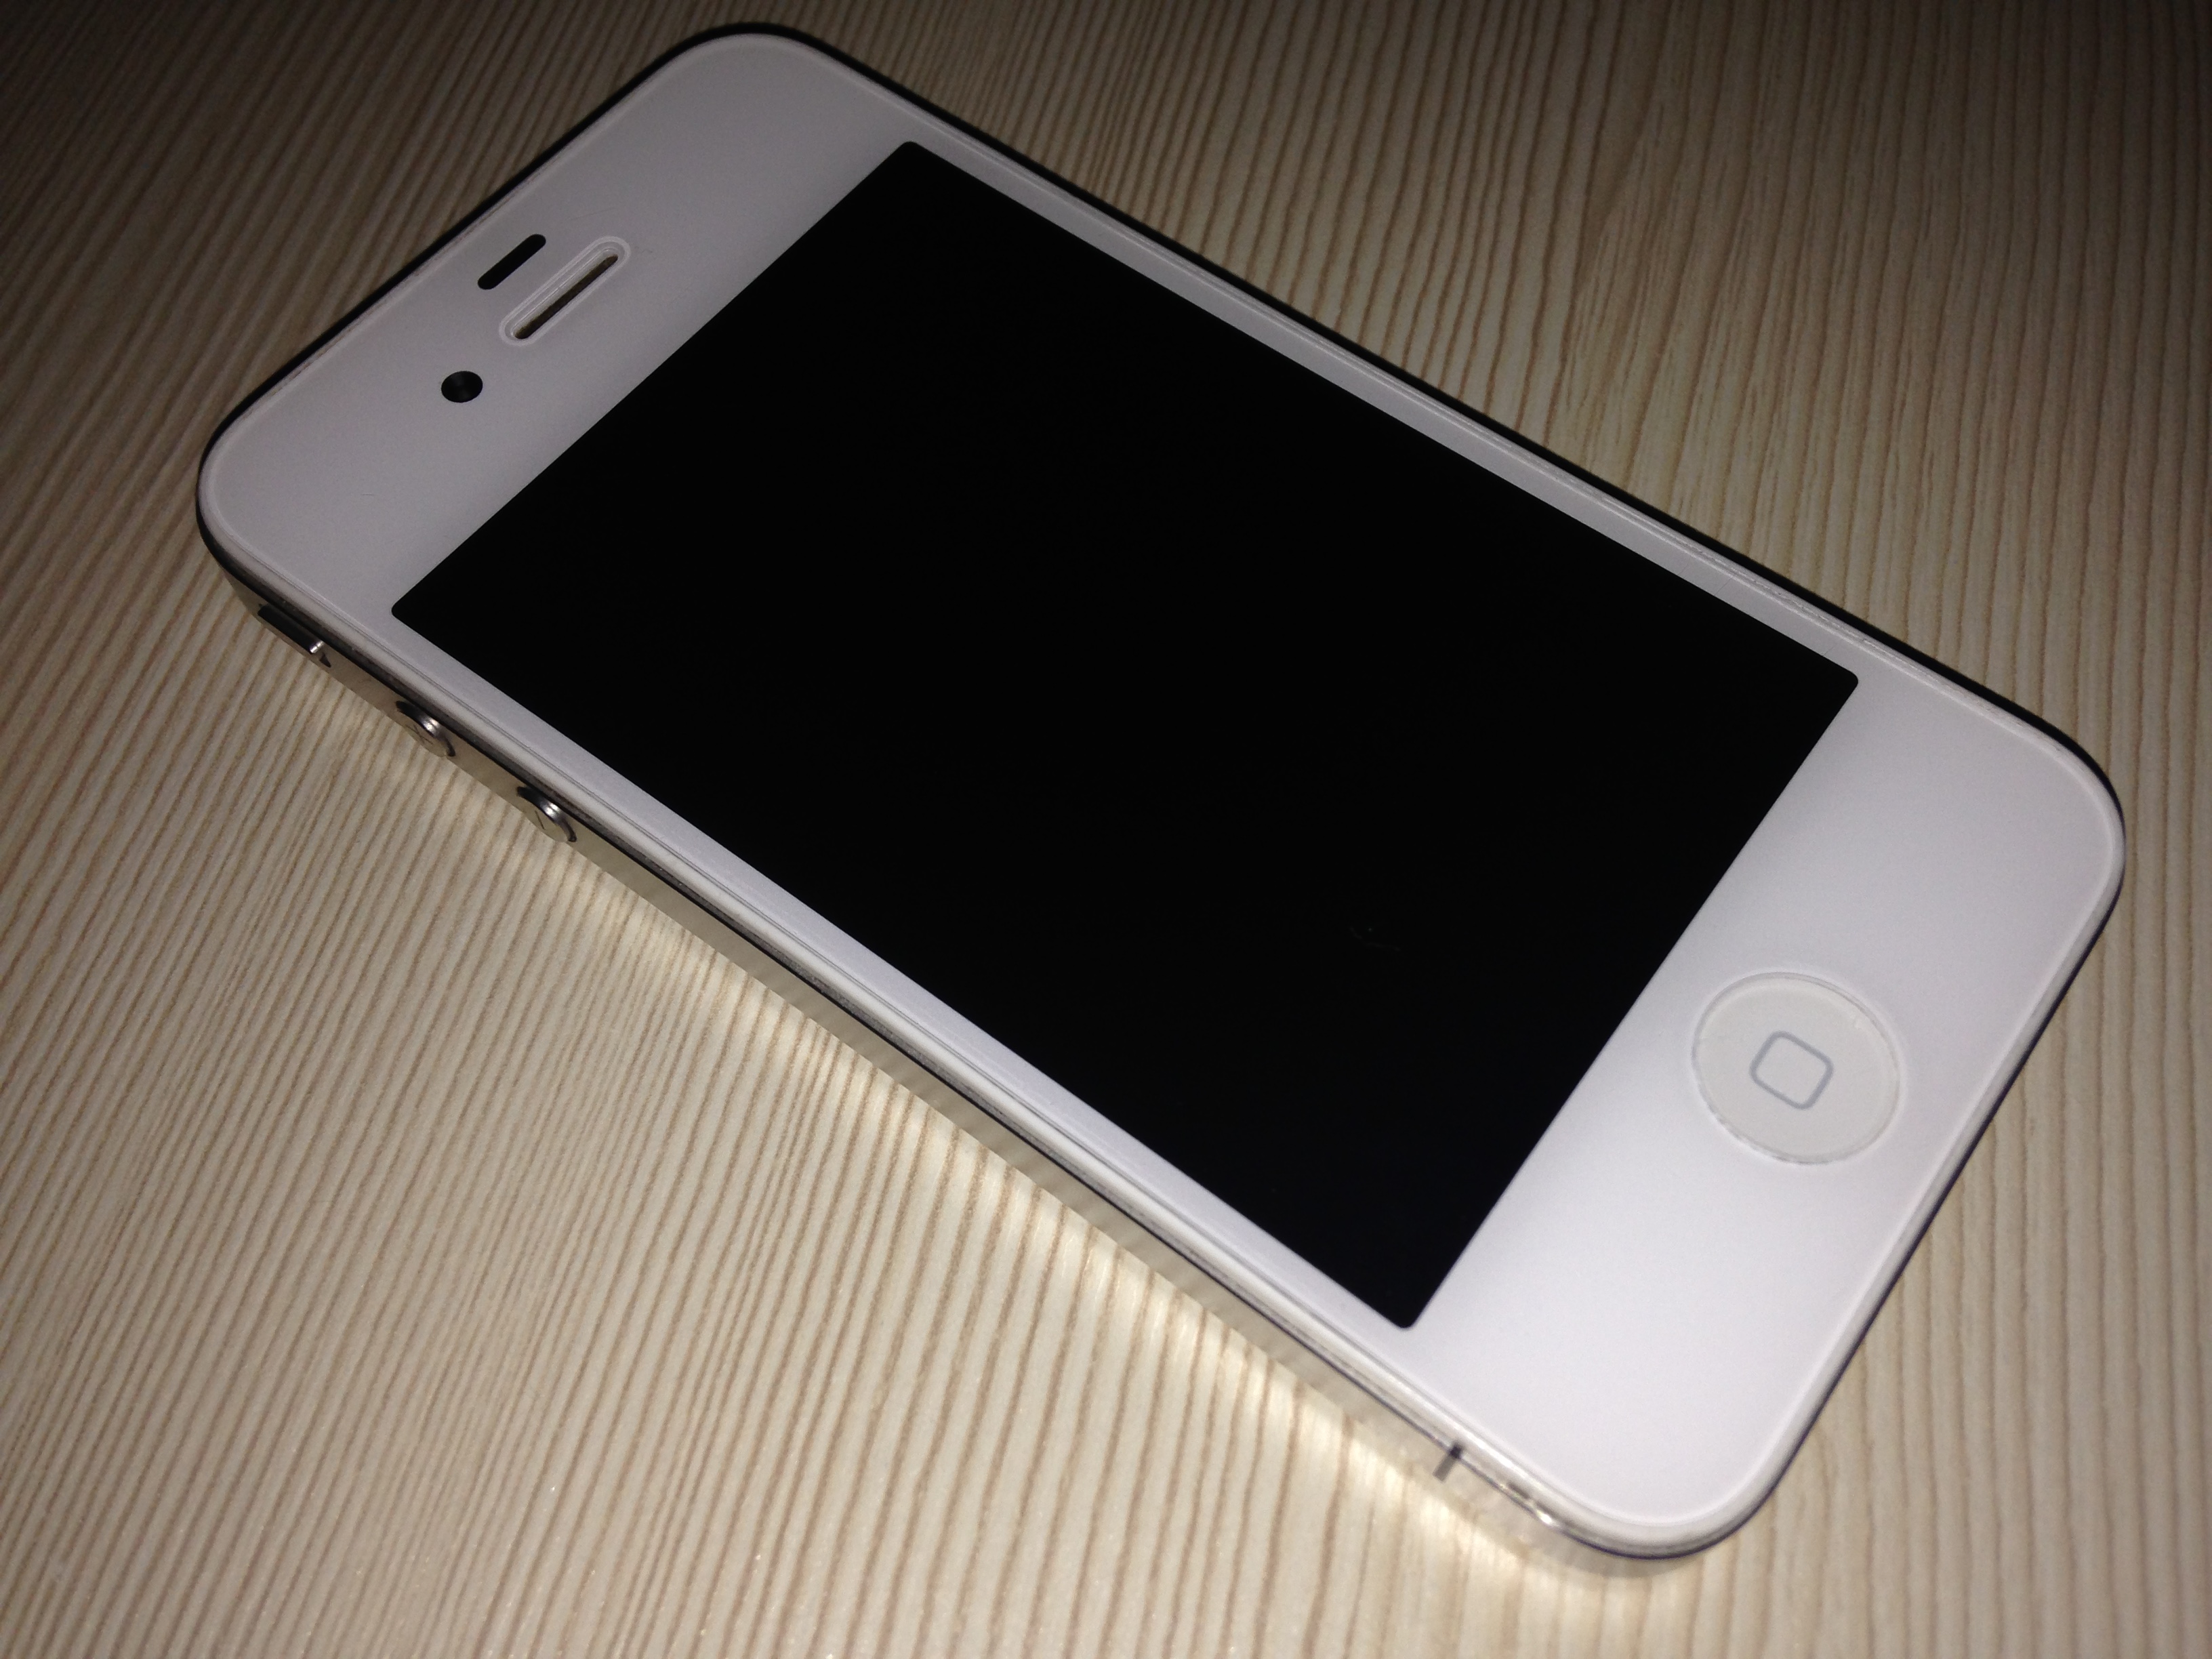 Айфон 4 8. Iphone 4s белый. Айфон 4 белый. Apple iphone 4s White. Iphone 4 White.